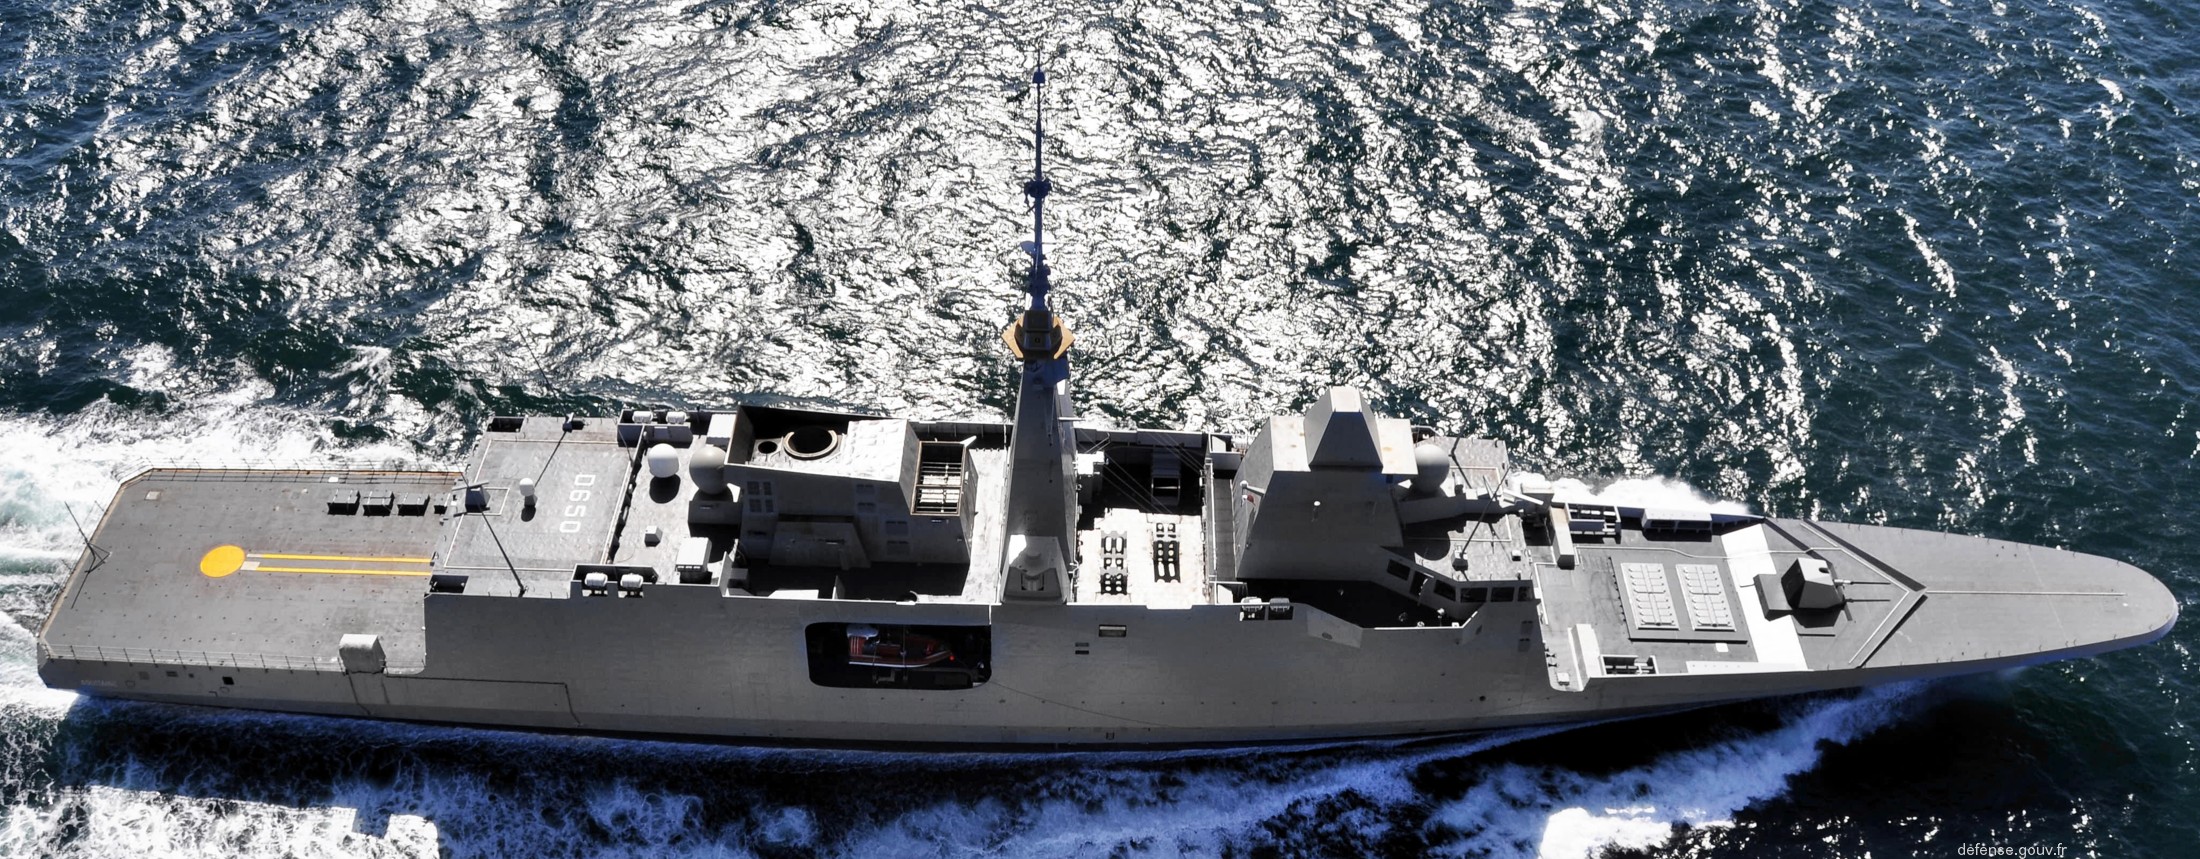 d-650 fs aquitaine fremm class frigate fregate multi purpose french navy marine nationale 10